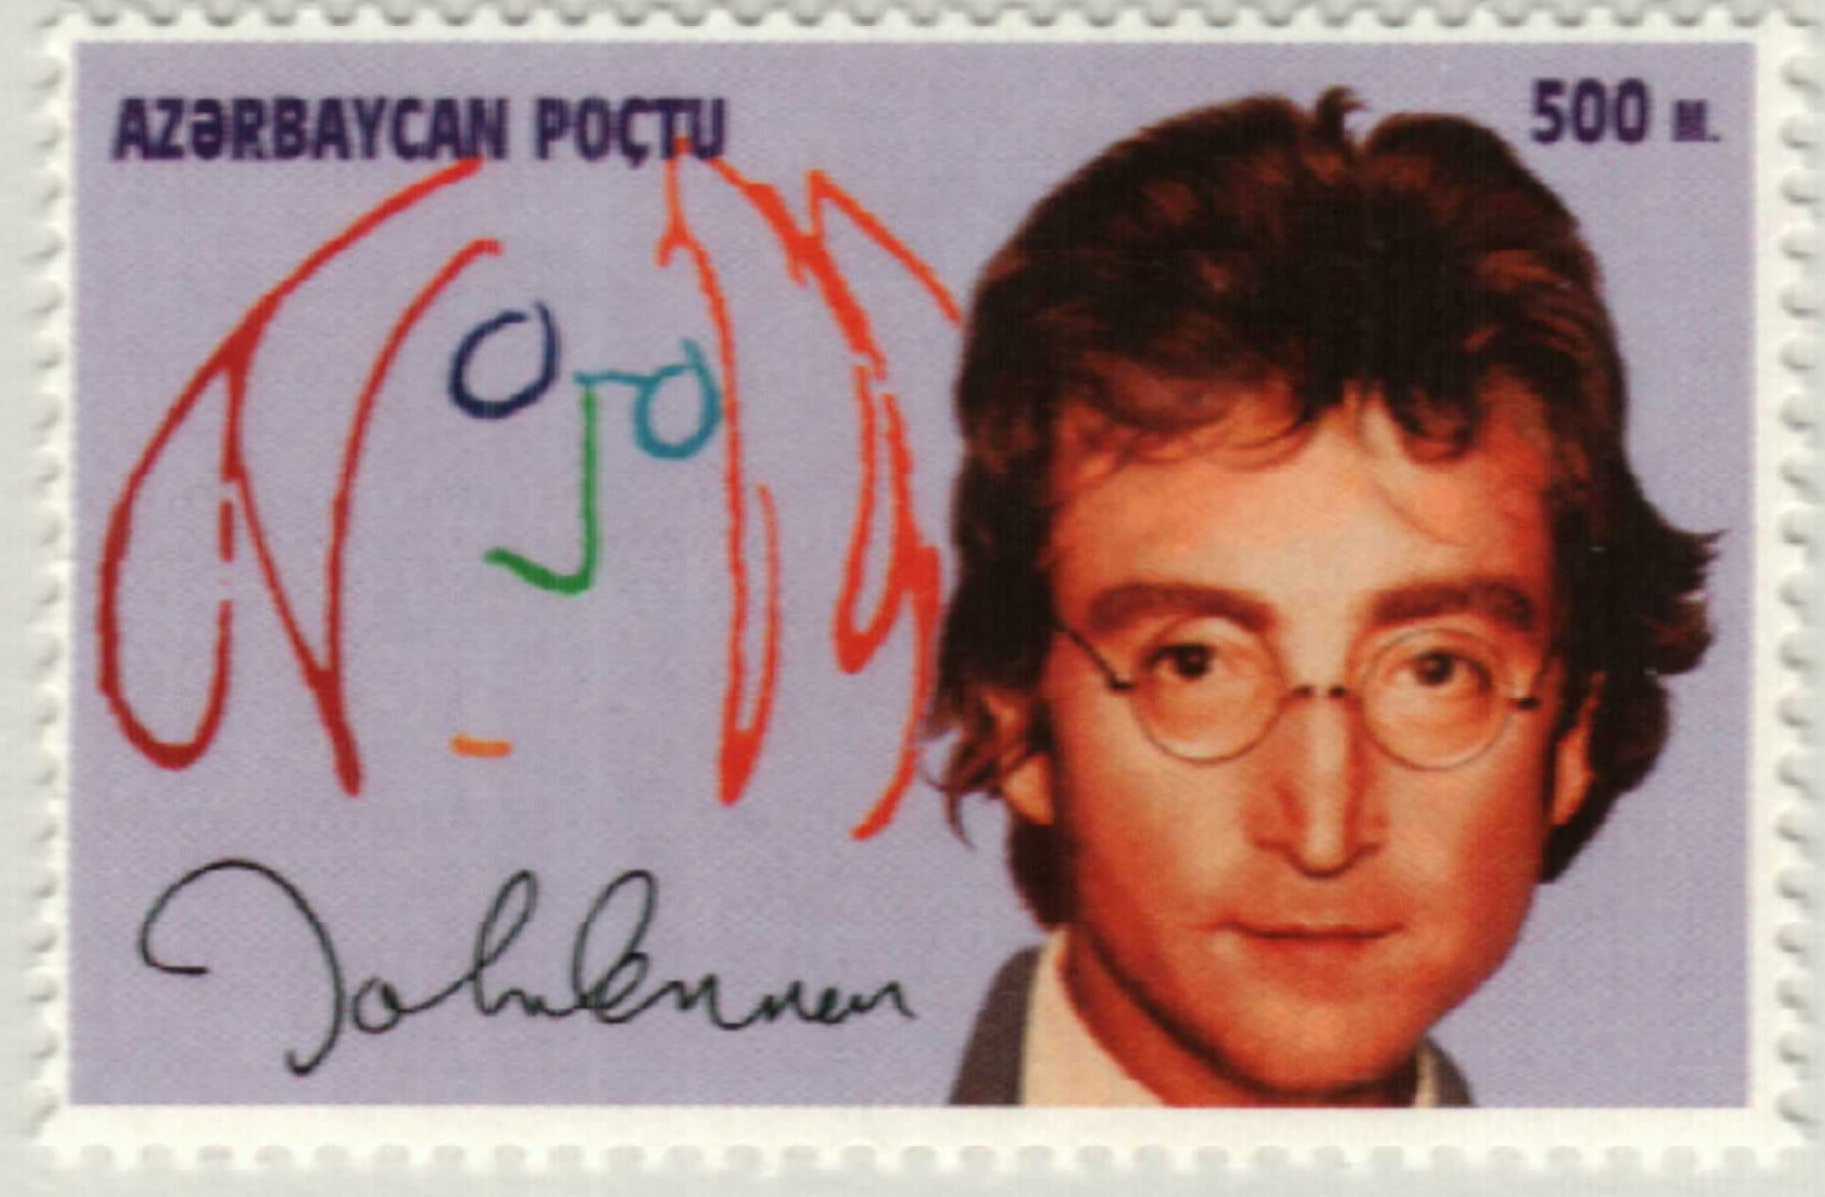 1995 Azerbaijan John Lennon stamp